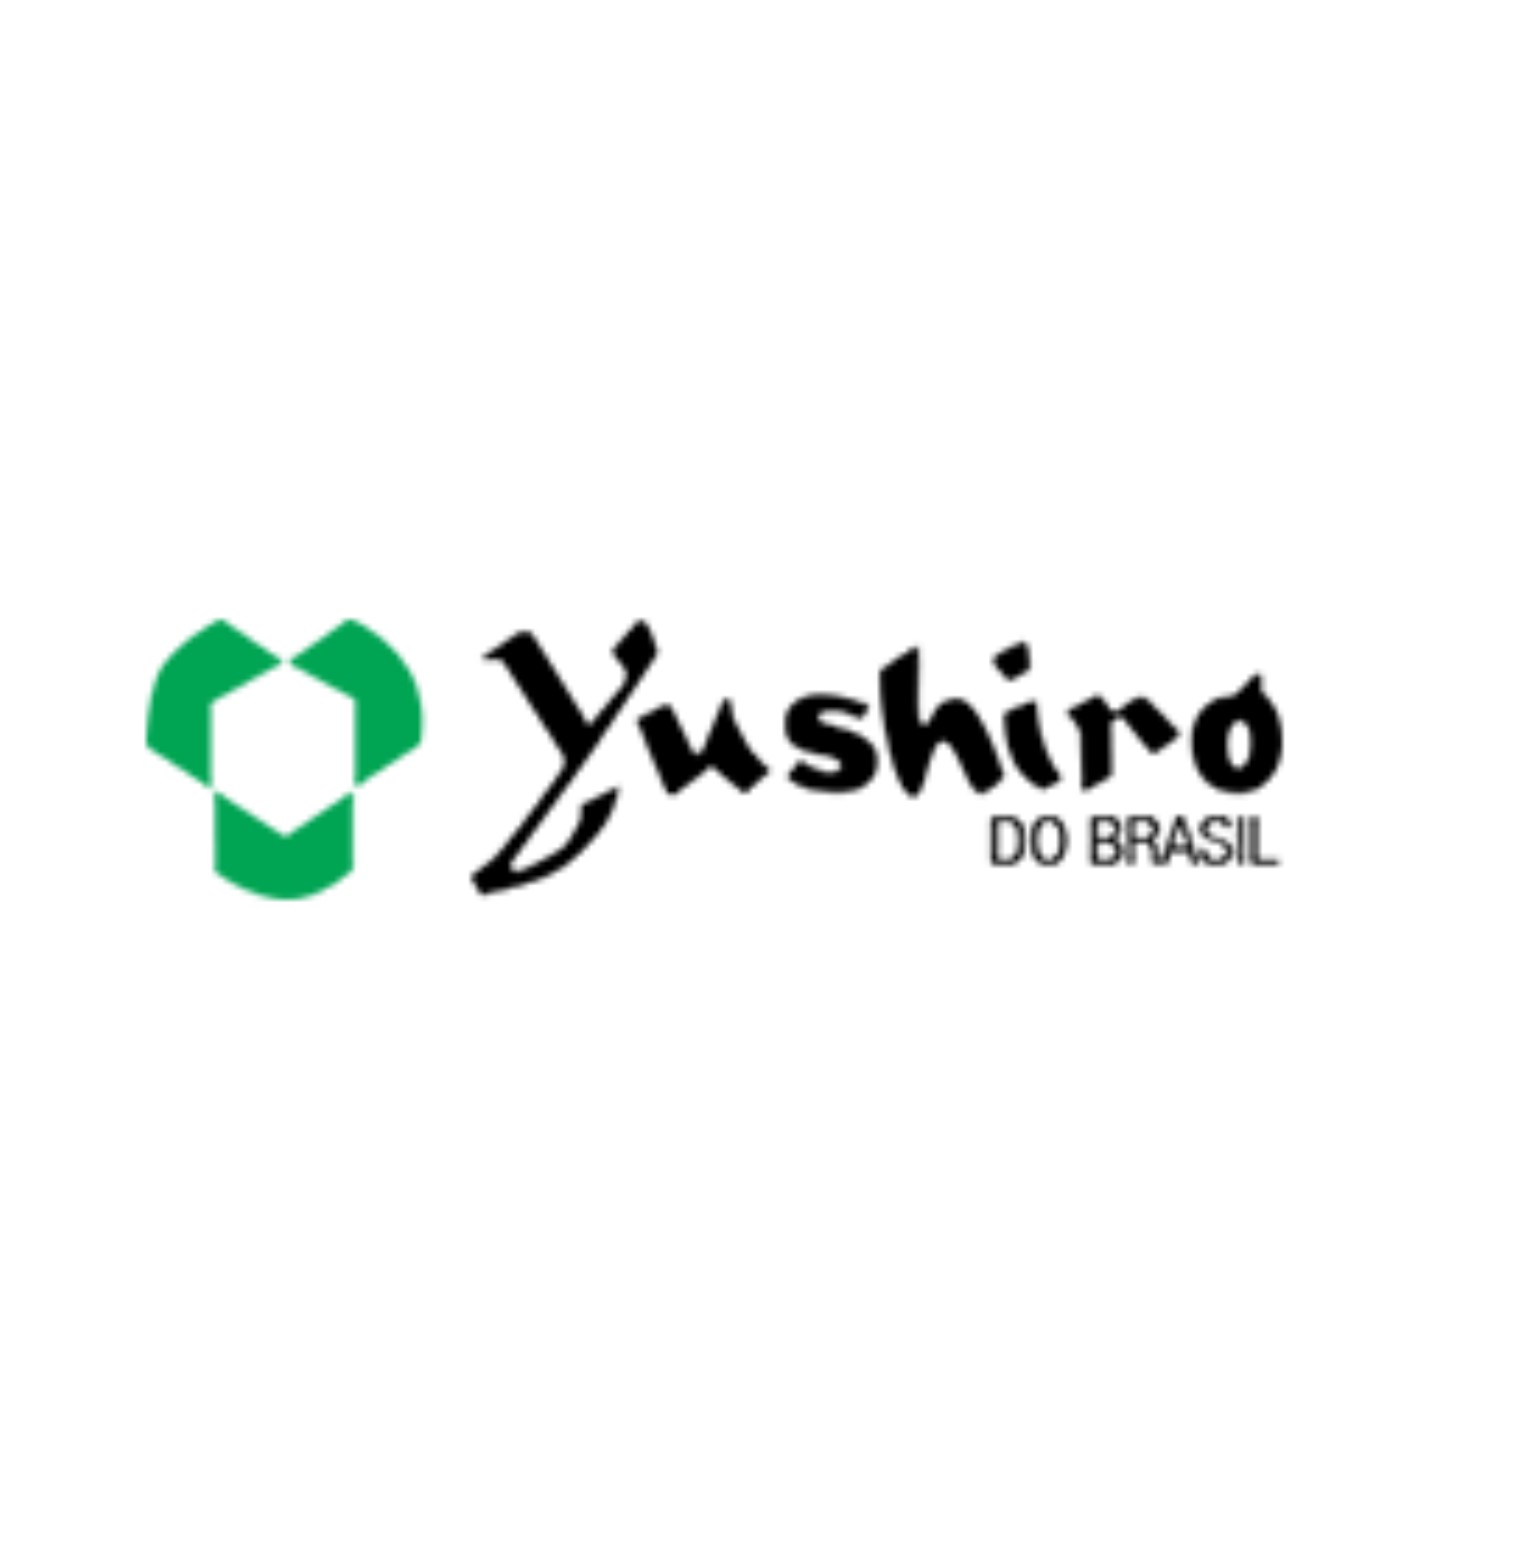 yushiro